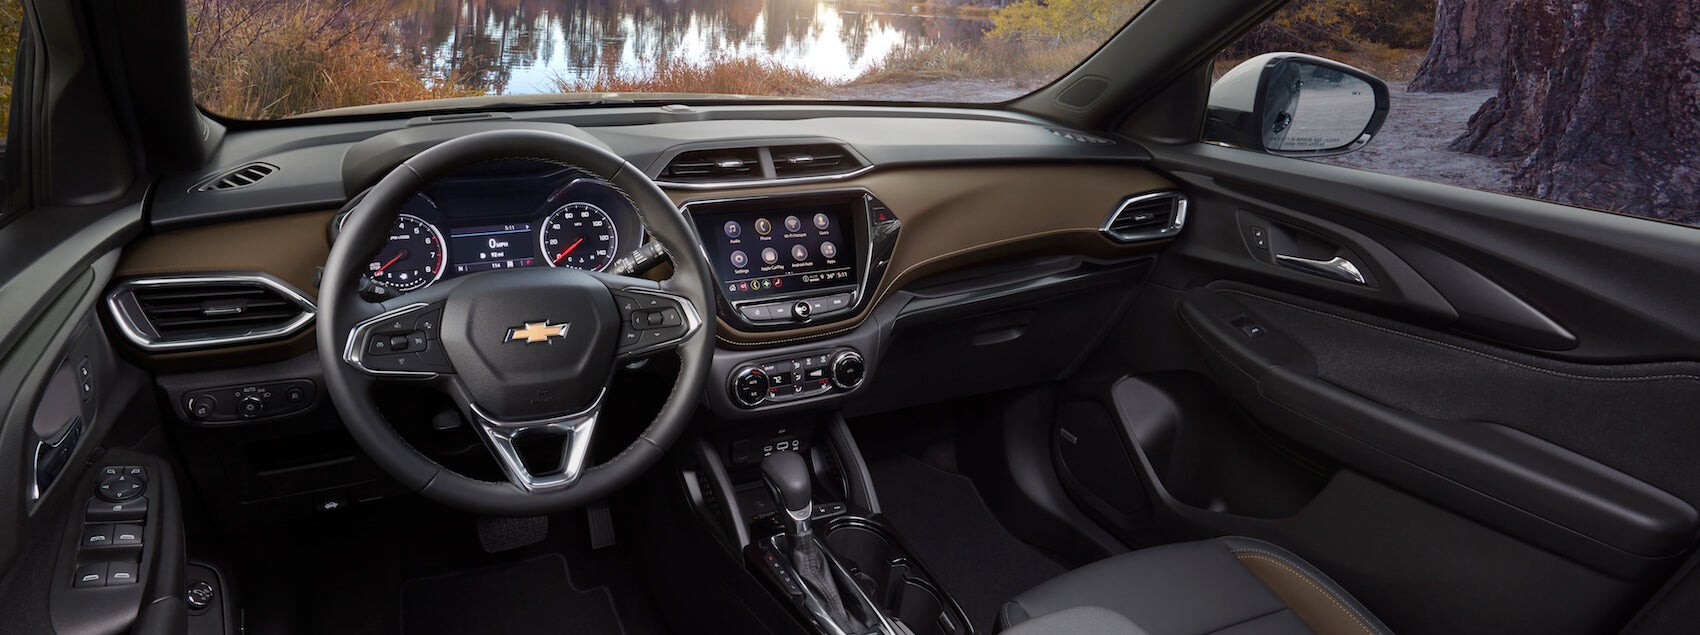 2021 Chevy Trailblazer interior review